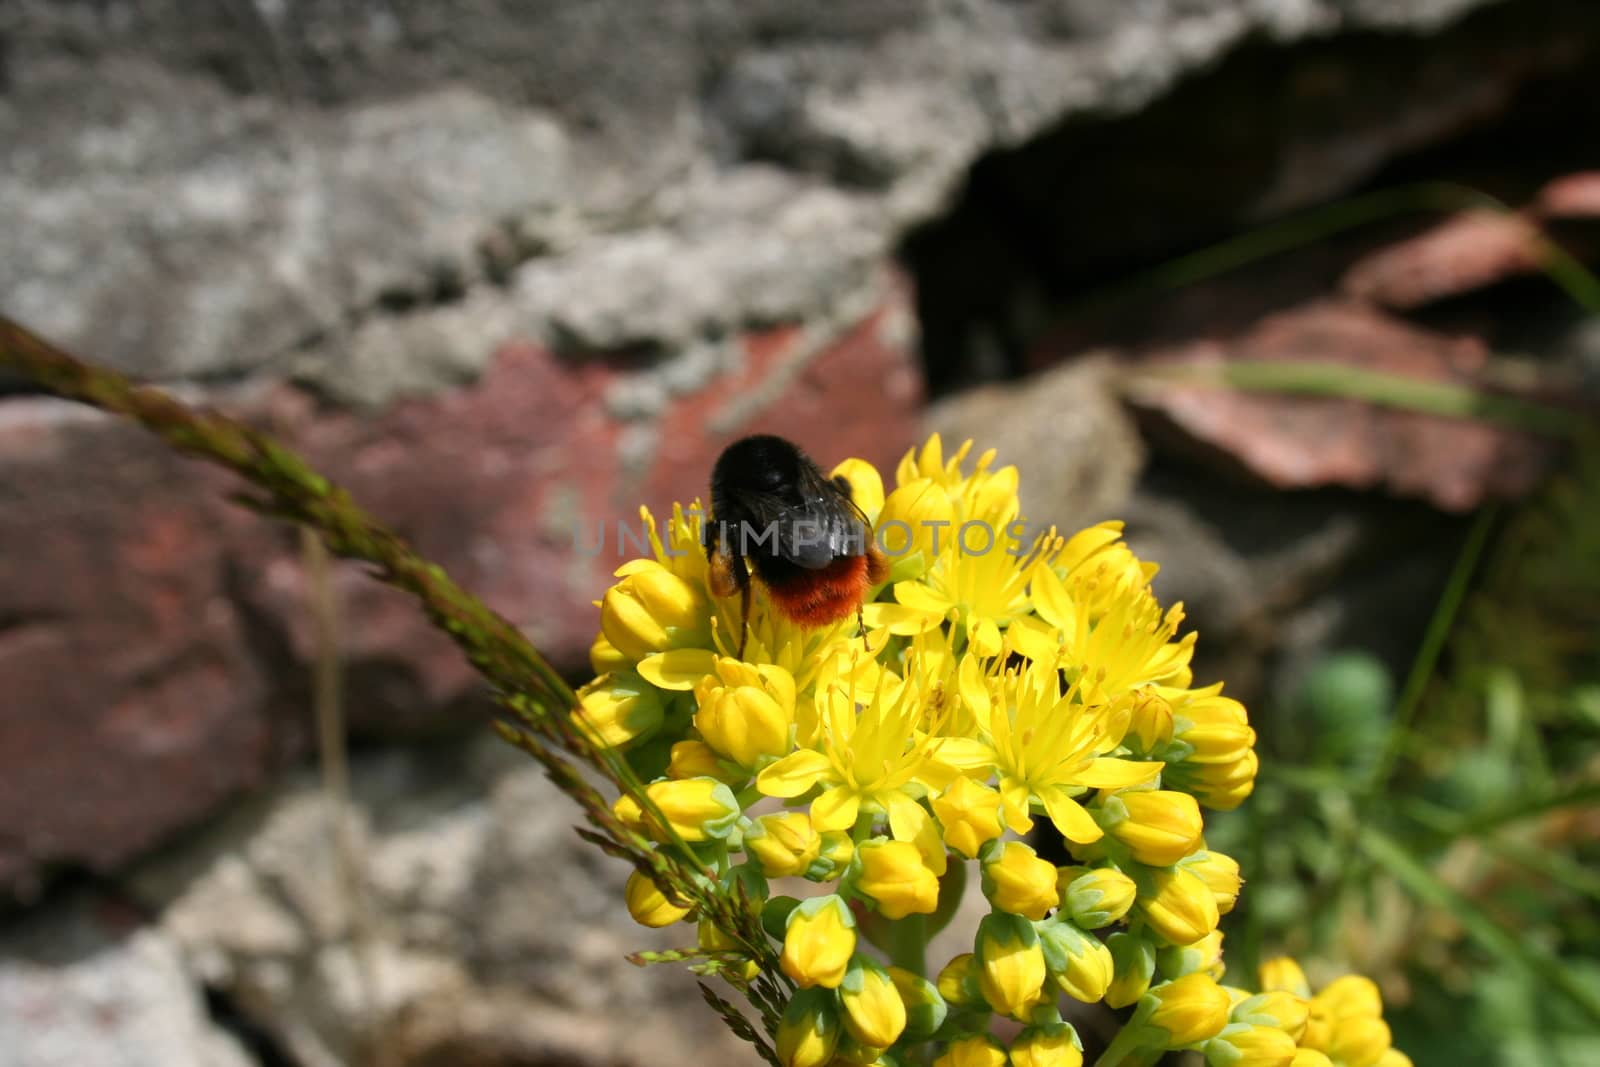 bumblebee by elin_merete